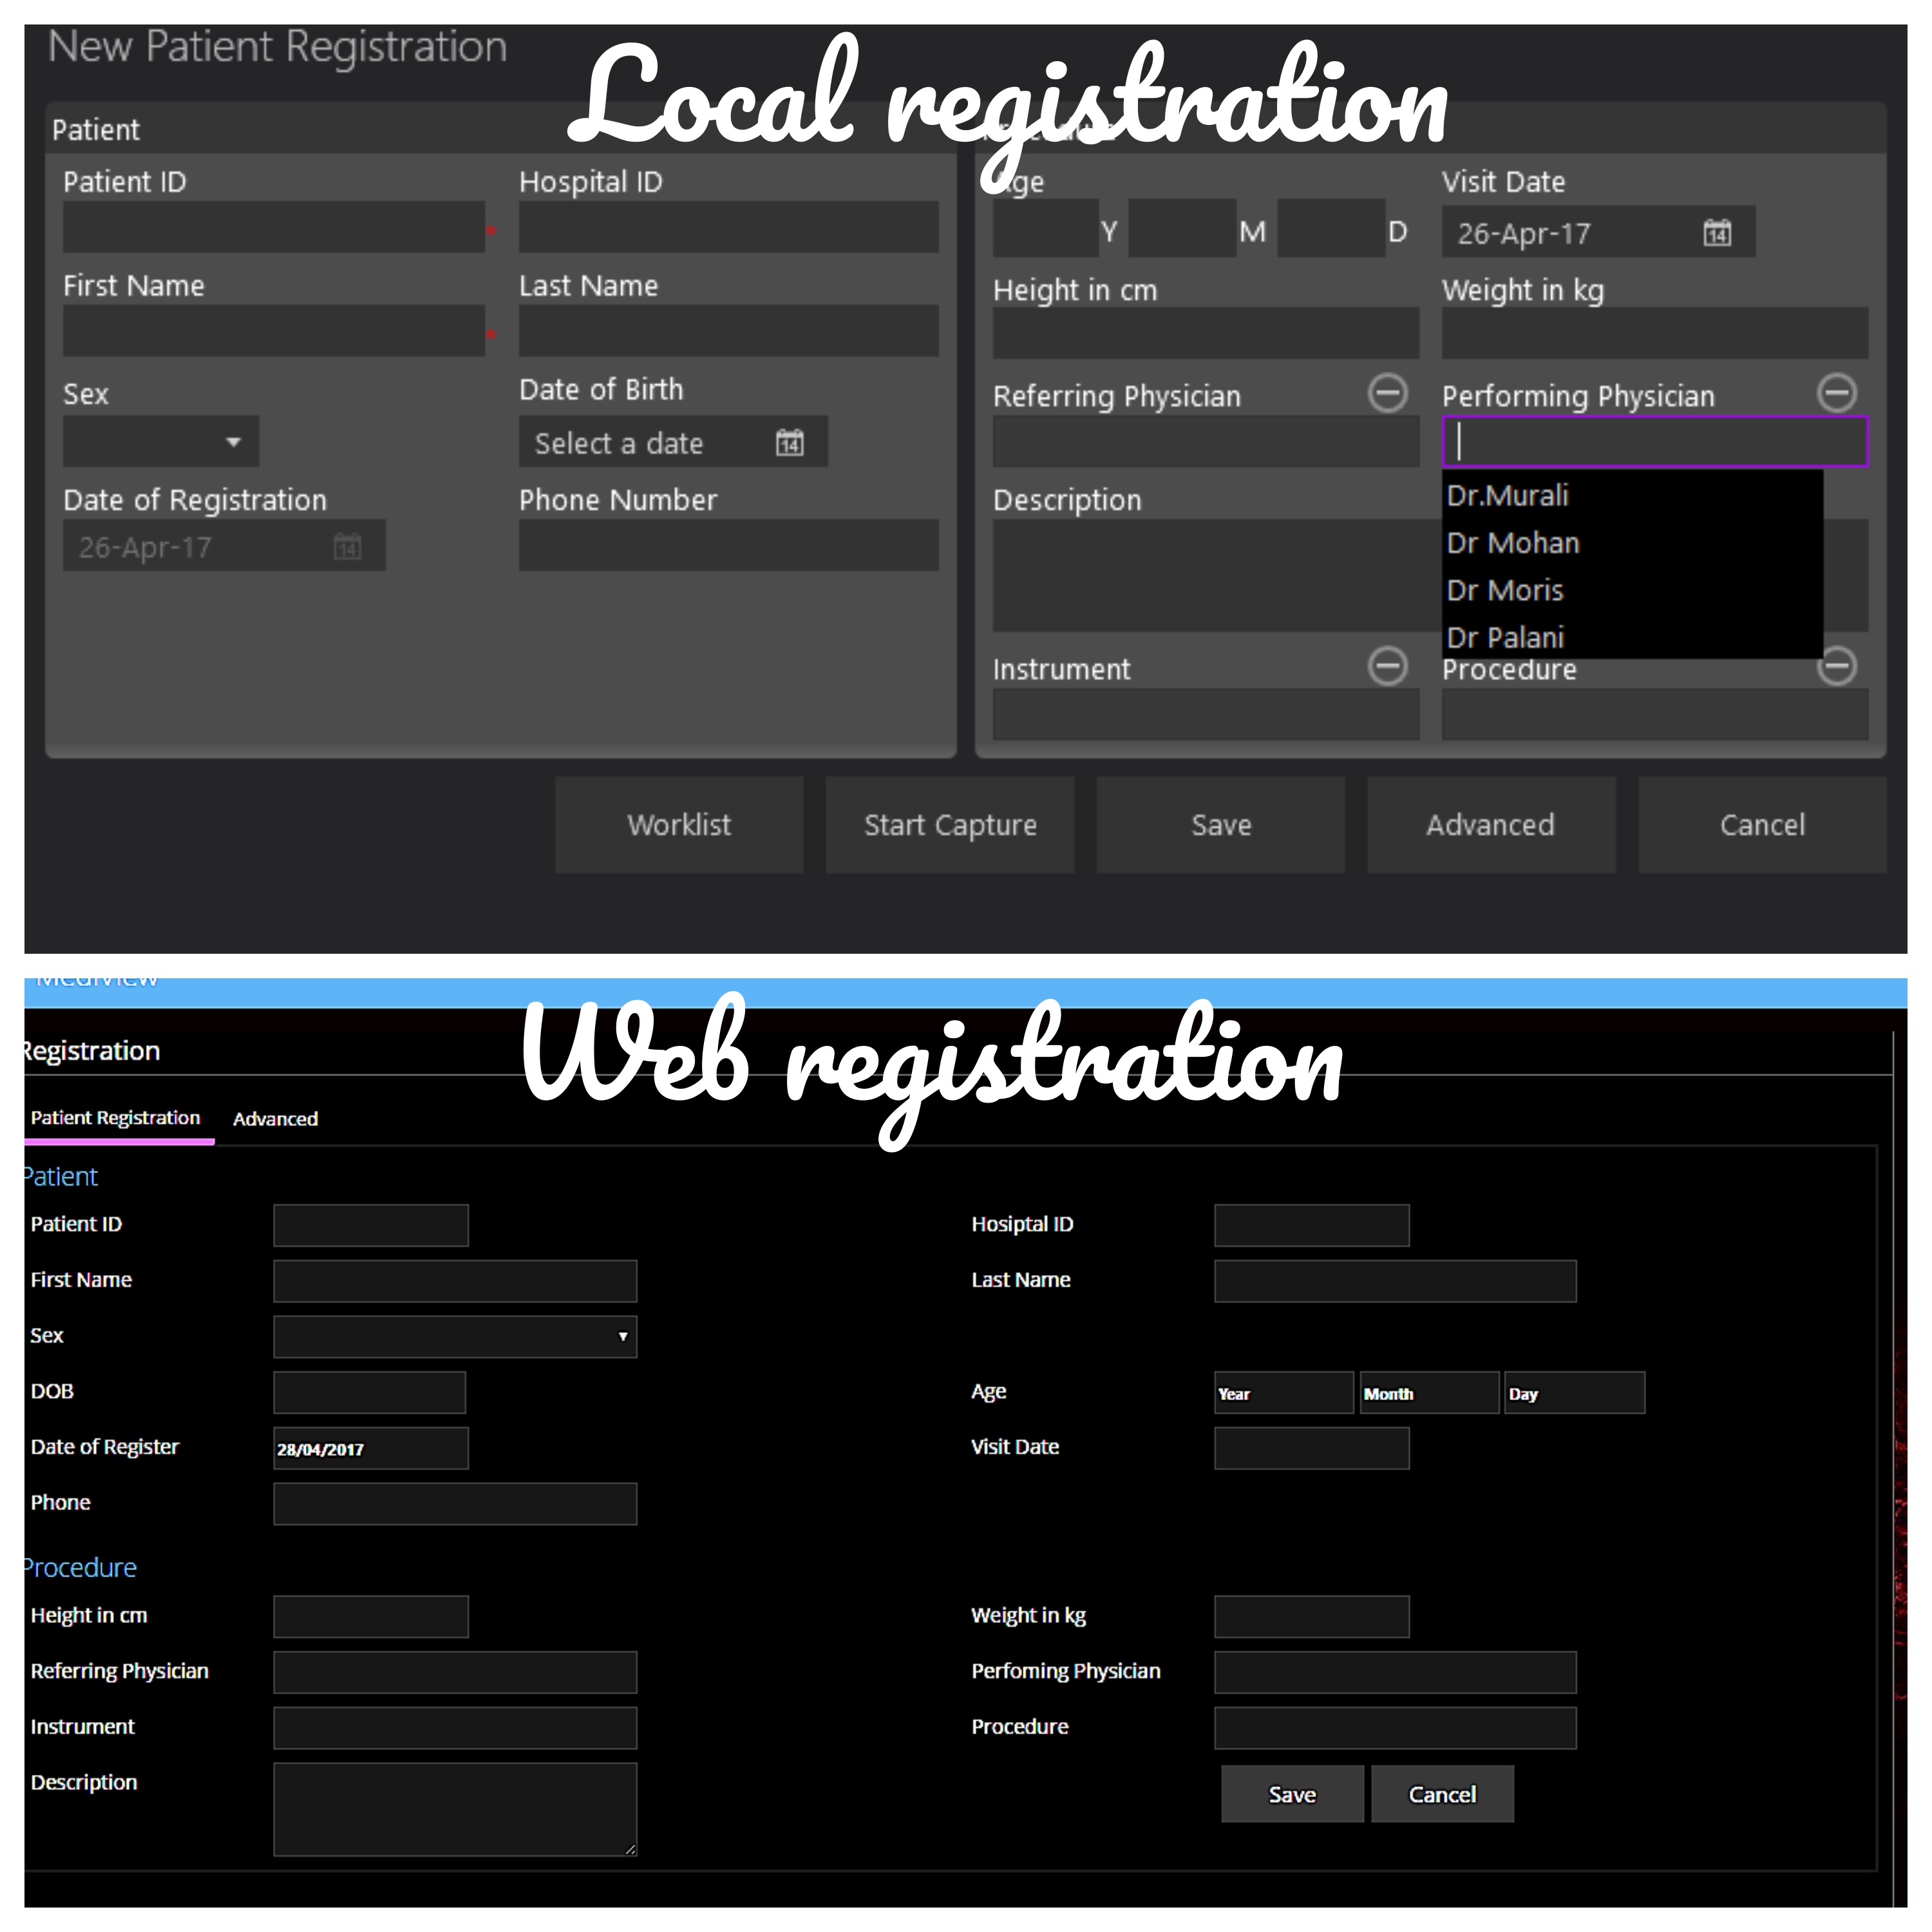 Registration Page in Medical Imaging Software